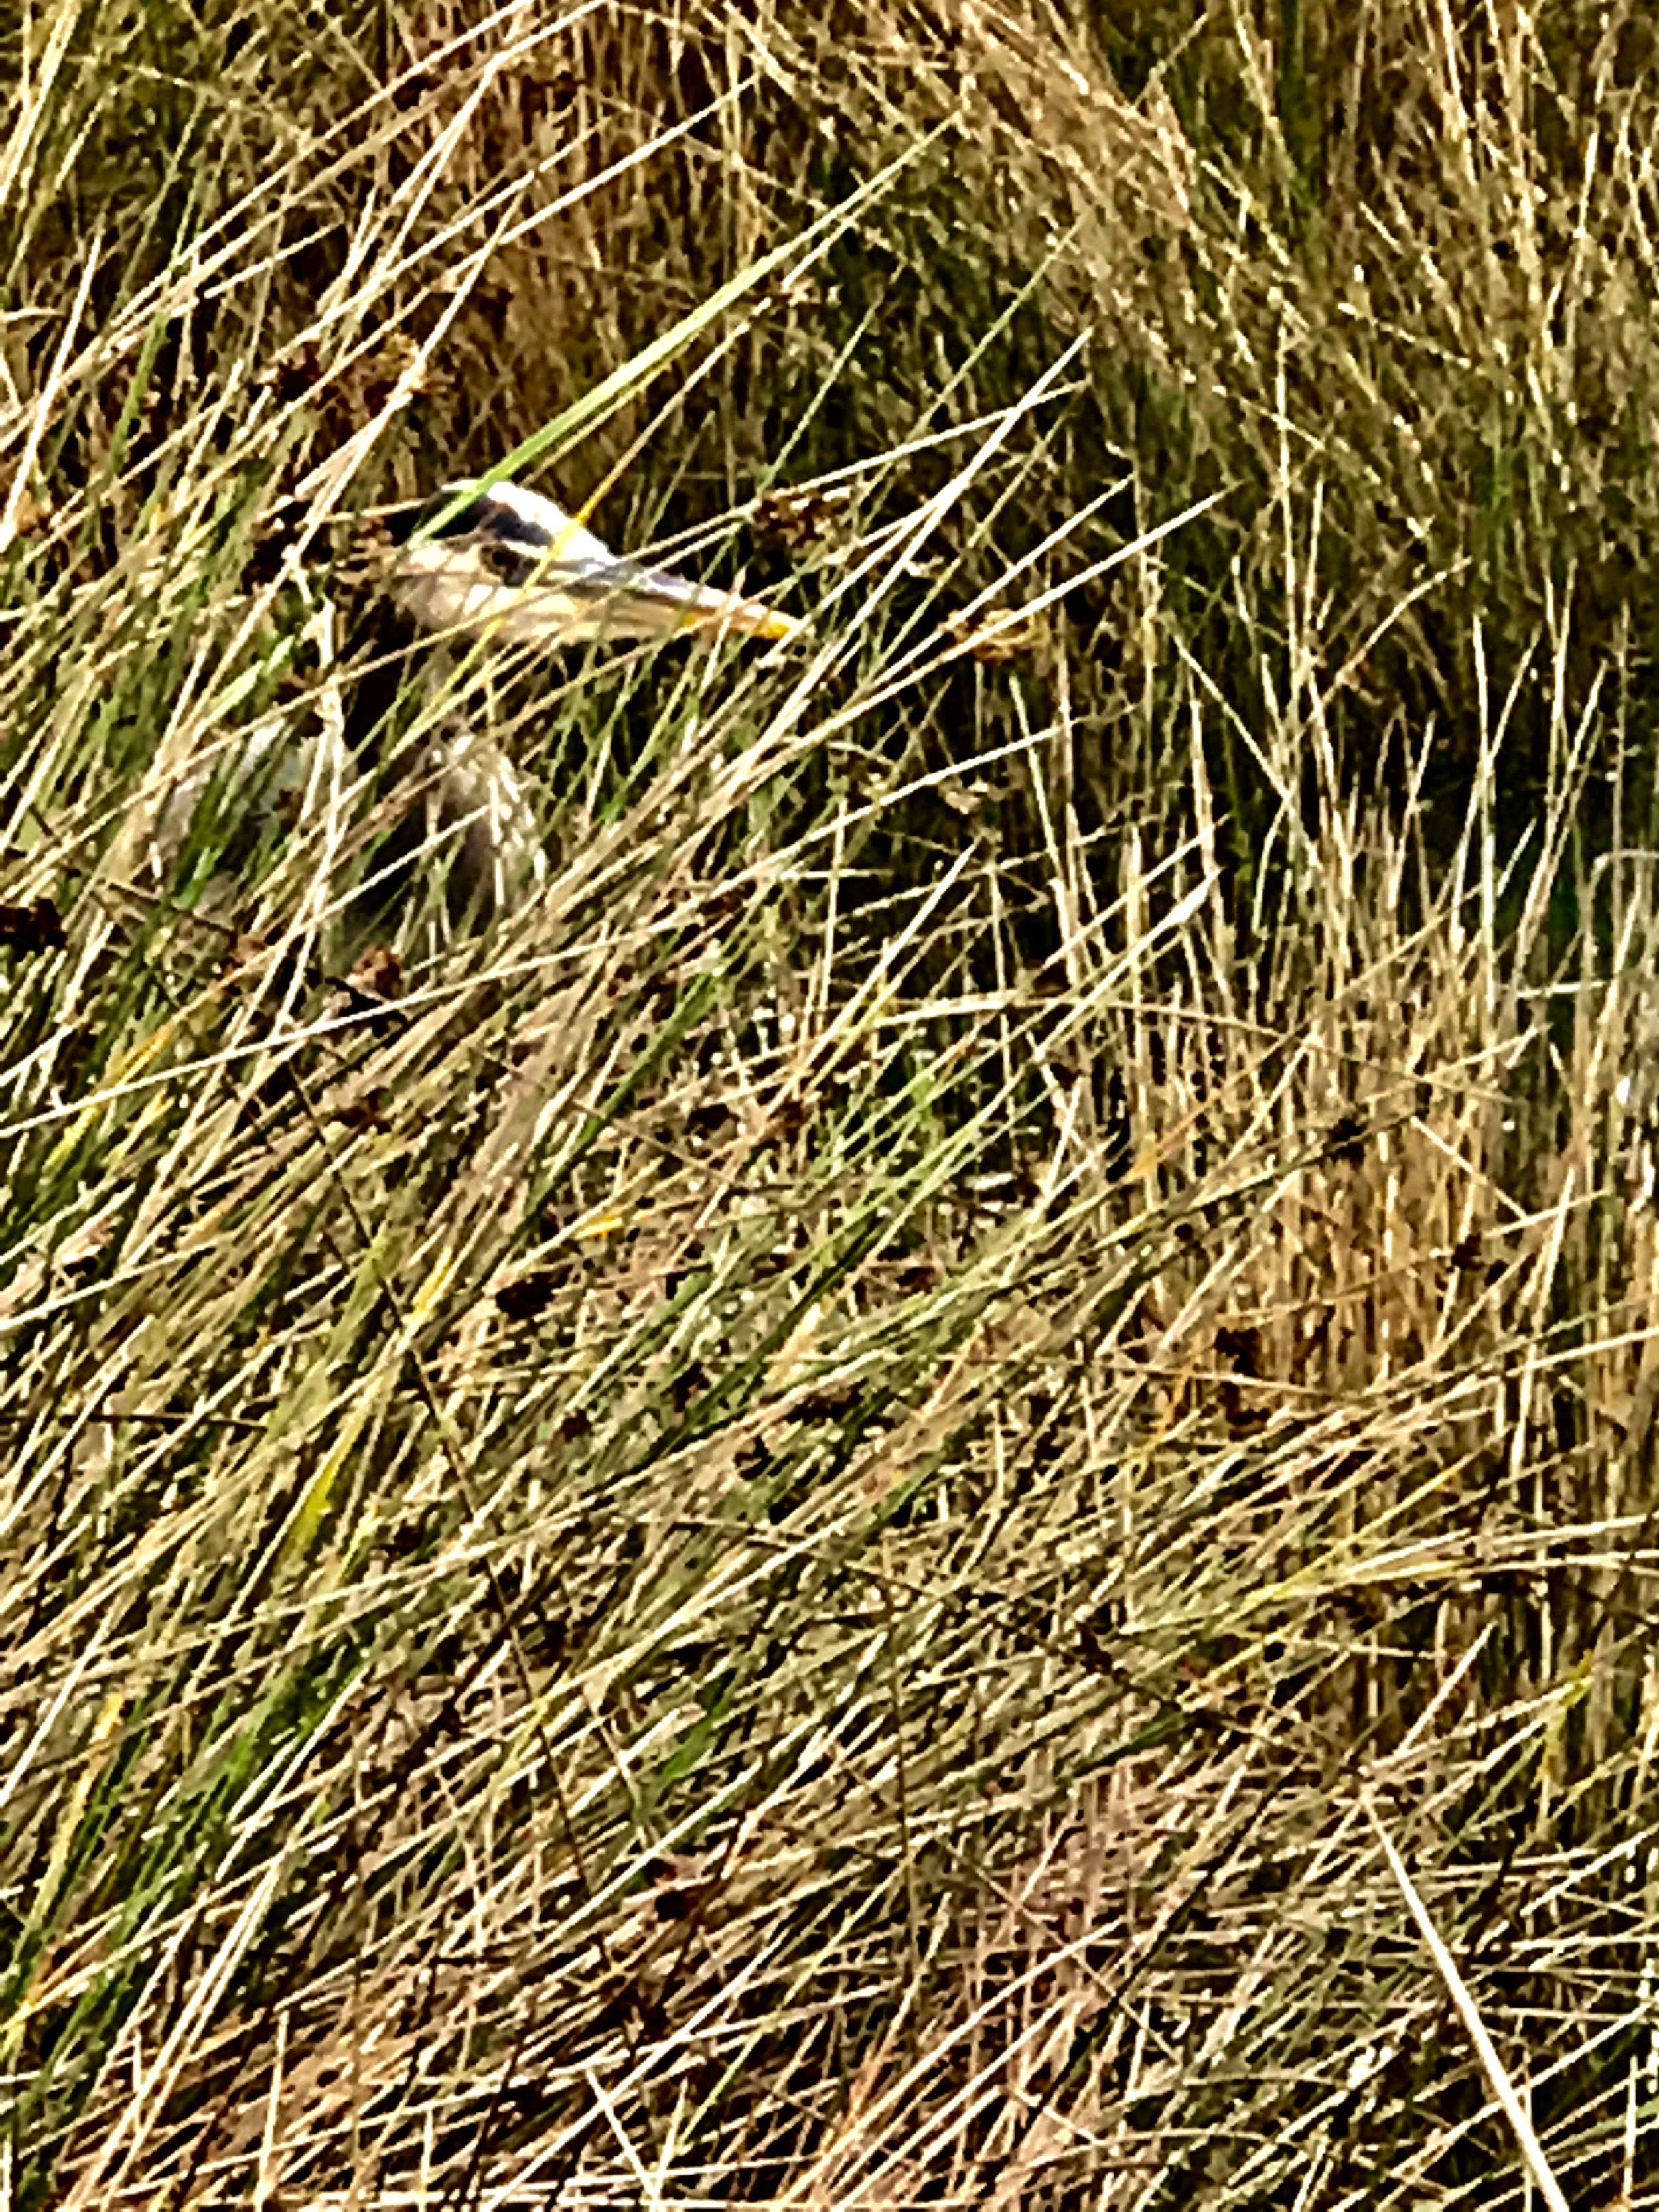 Blue Heron head above reeds.jpeg 1.jpeg